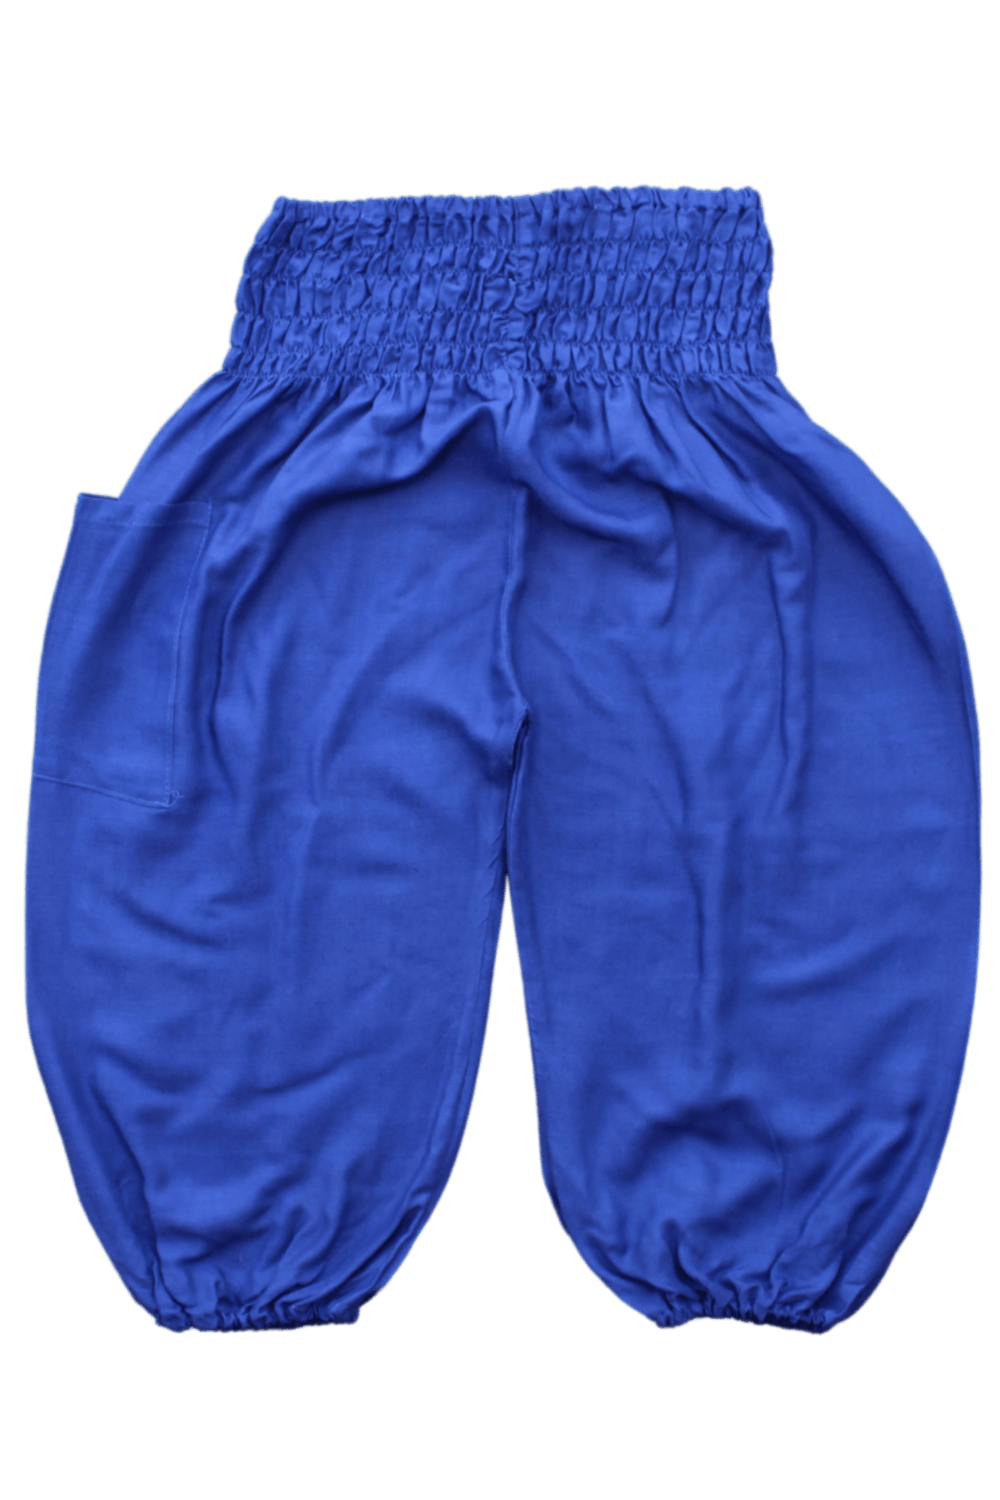 Royal Blue Kids Harem Pants, boho pants for children from Bohemian Island